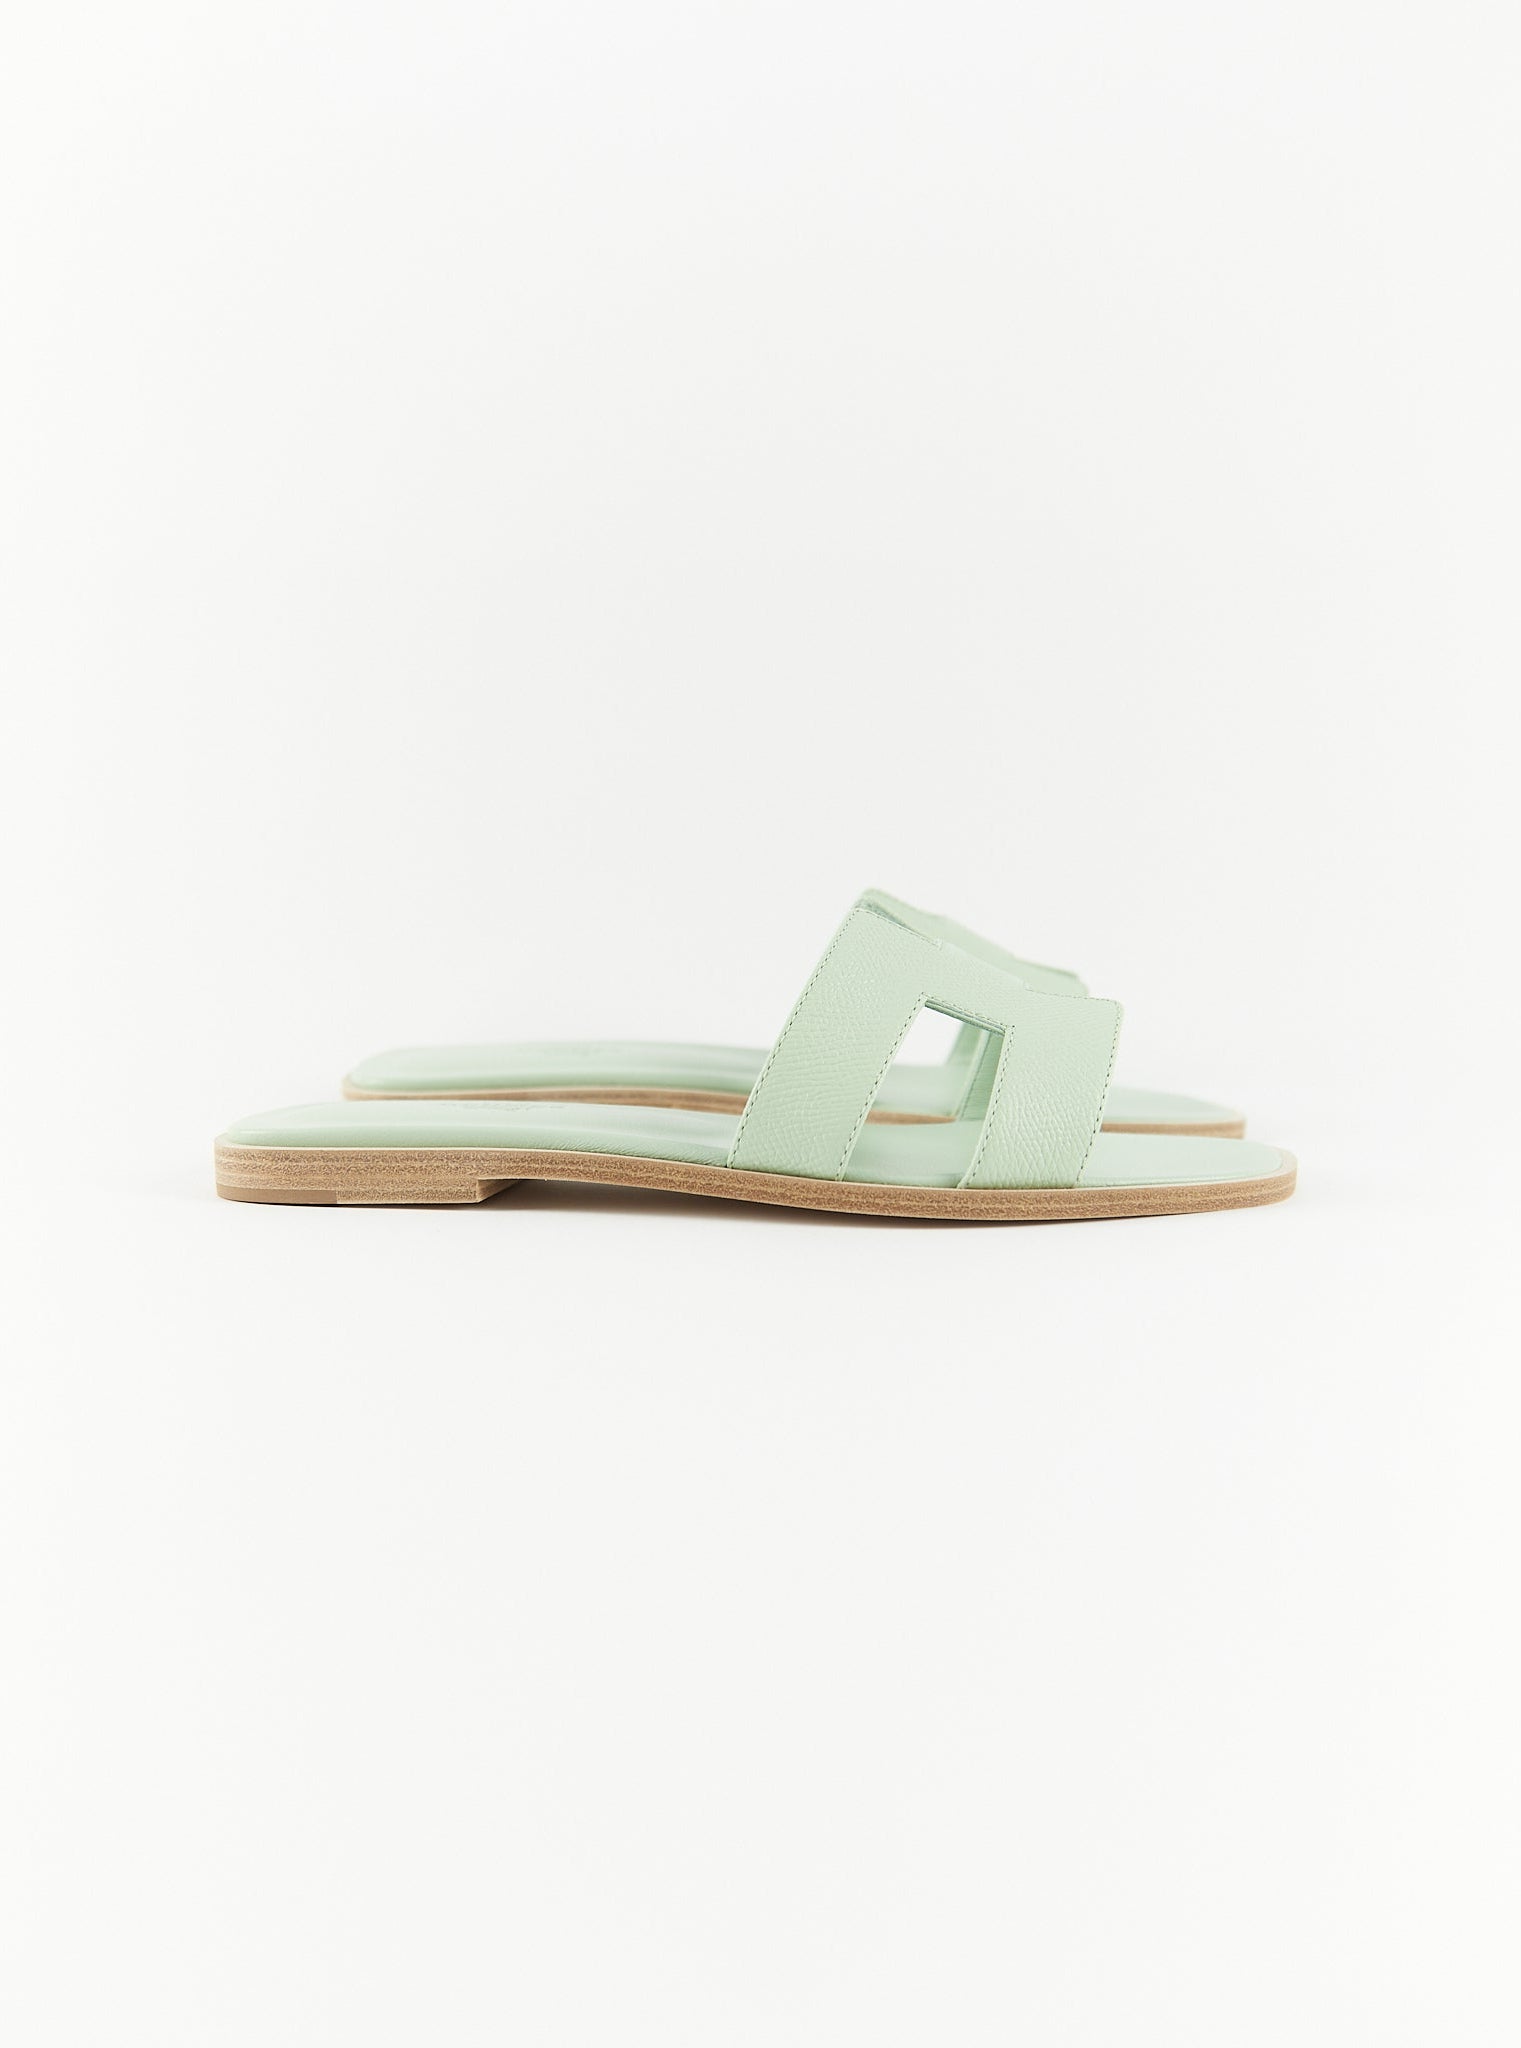 Hermès Oran Sandals (Vert Jade)